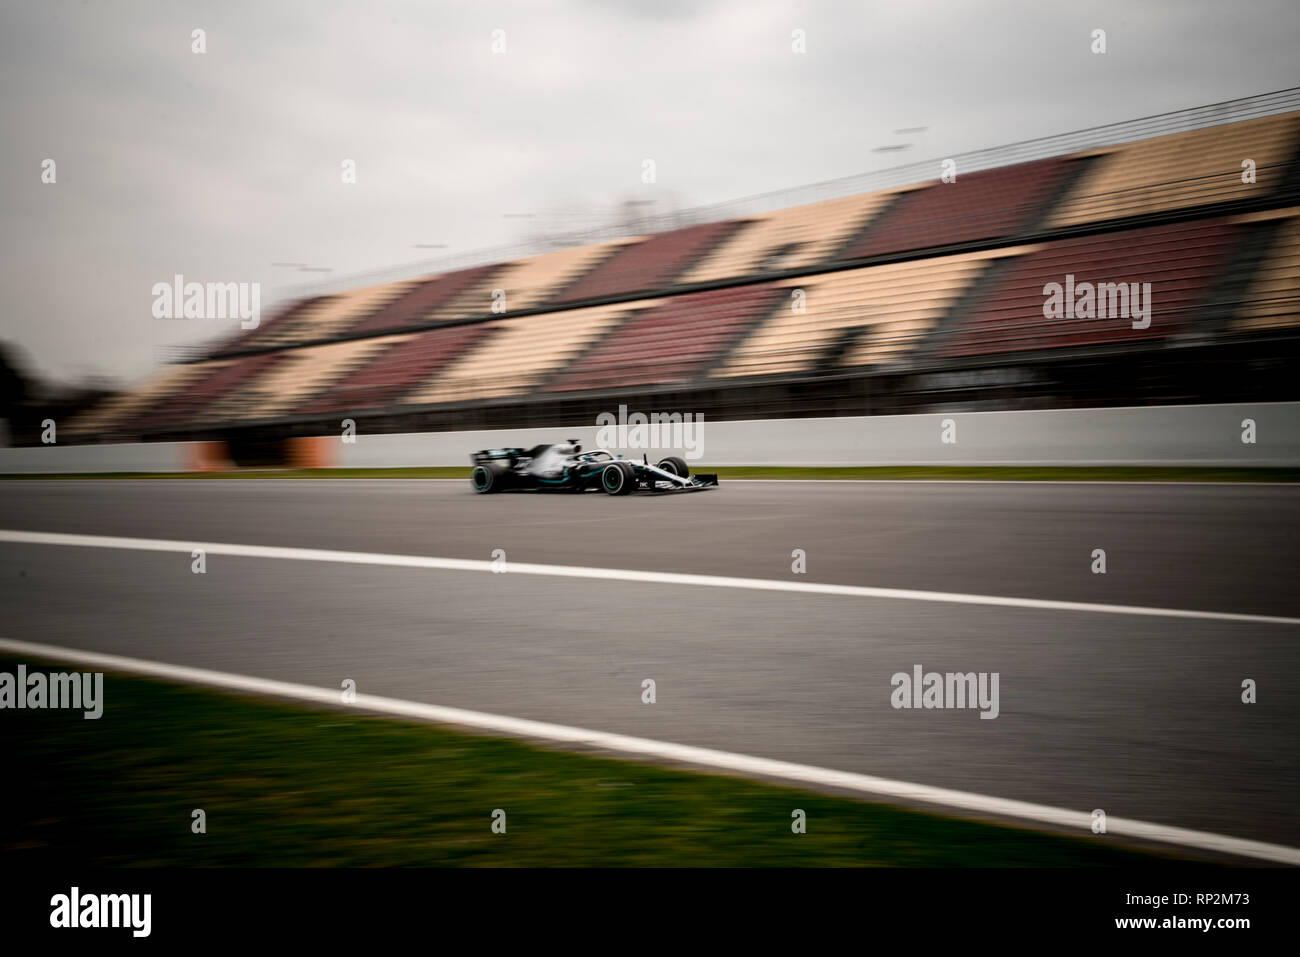 Barcelona, Spain. 20th Feb, 2019. Valtteri Bottas of Mercedes F1 Team    at the Circuit de Catalunya in Montmelo (Barcelona province) during the pre-season testing session. Credit:  Jordi Boixareu/Alamy Live News Stock Photo